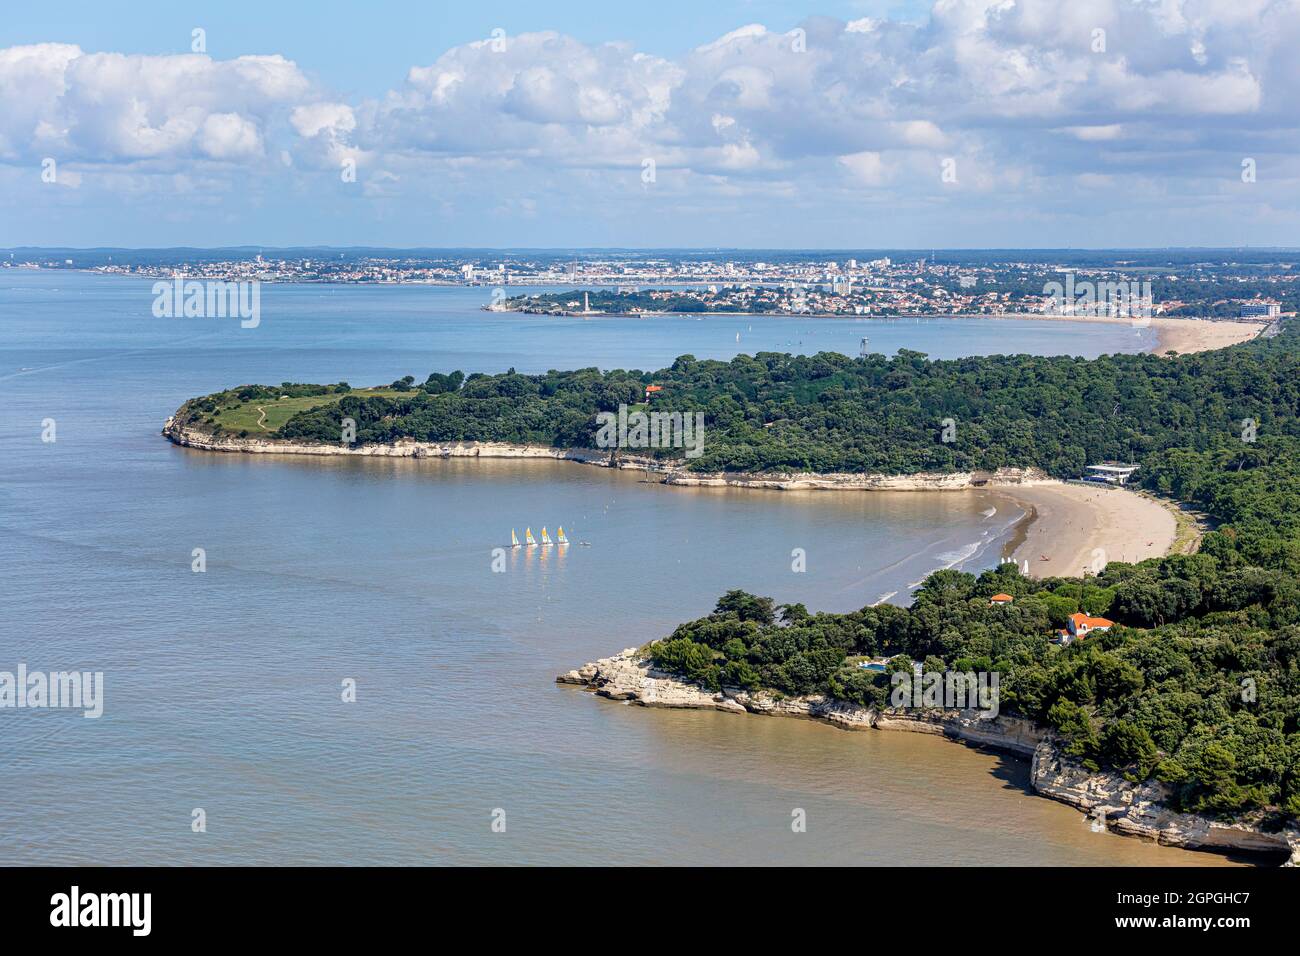 France, Charente Maritime, Meschers sur Gironde, the beach and pointe de Suzac (aerial view) Stock Photo